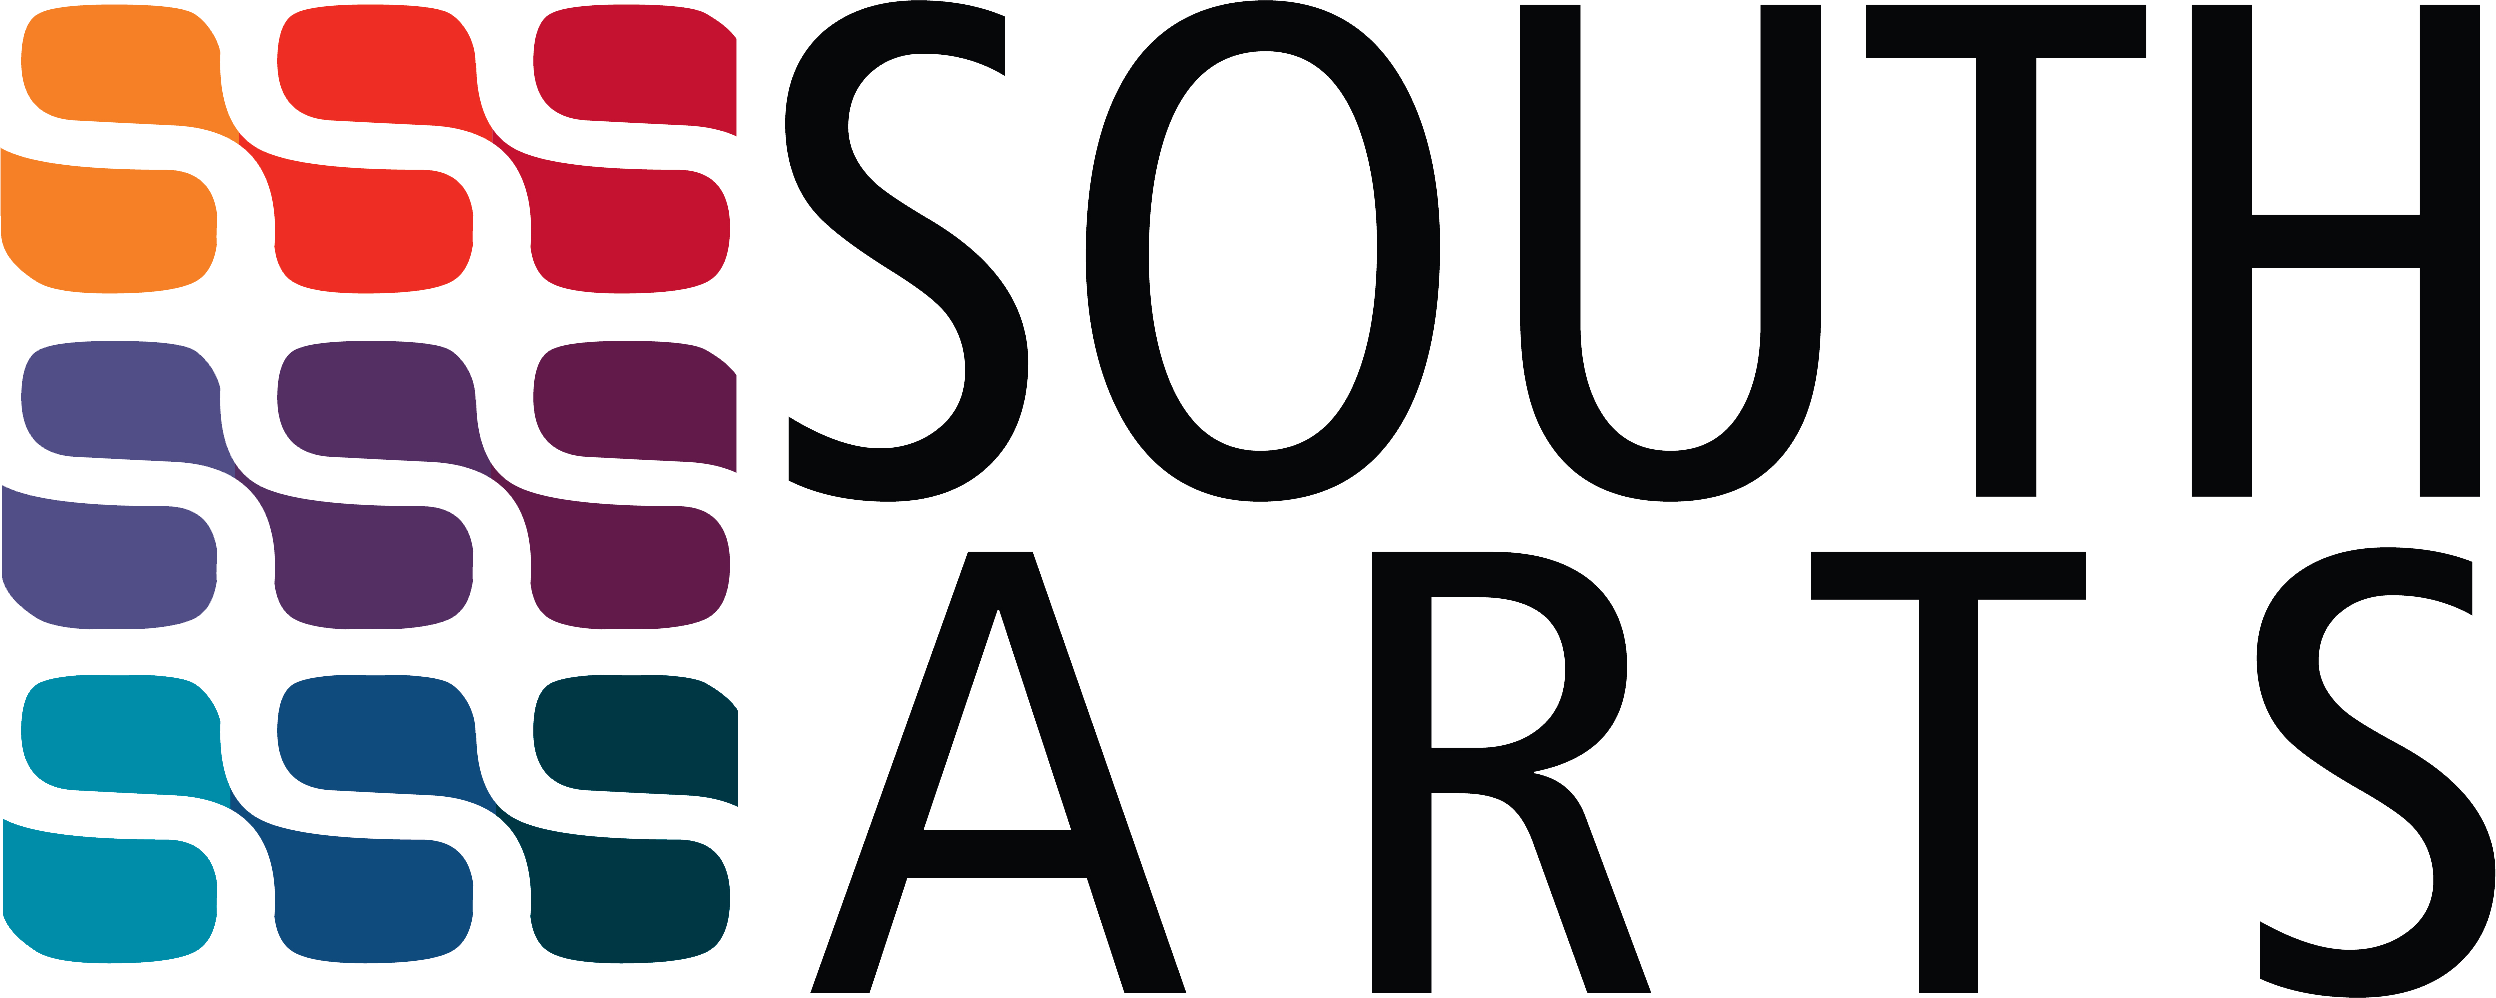 Buy Tickets - South Arts Logo (2496x998)